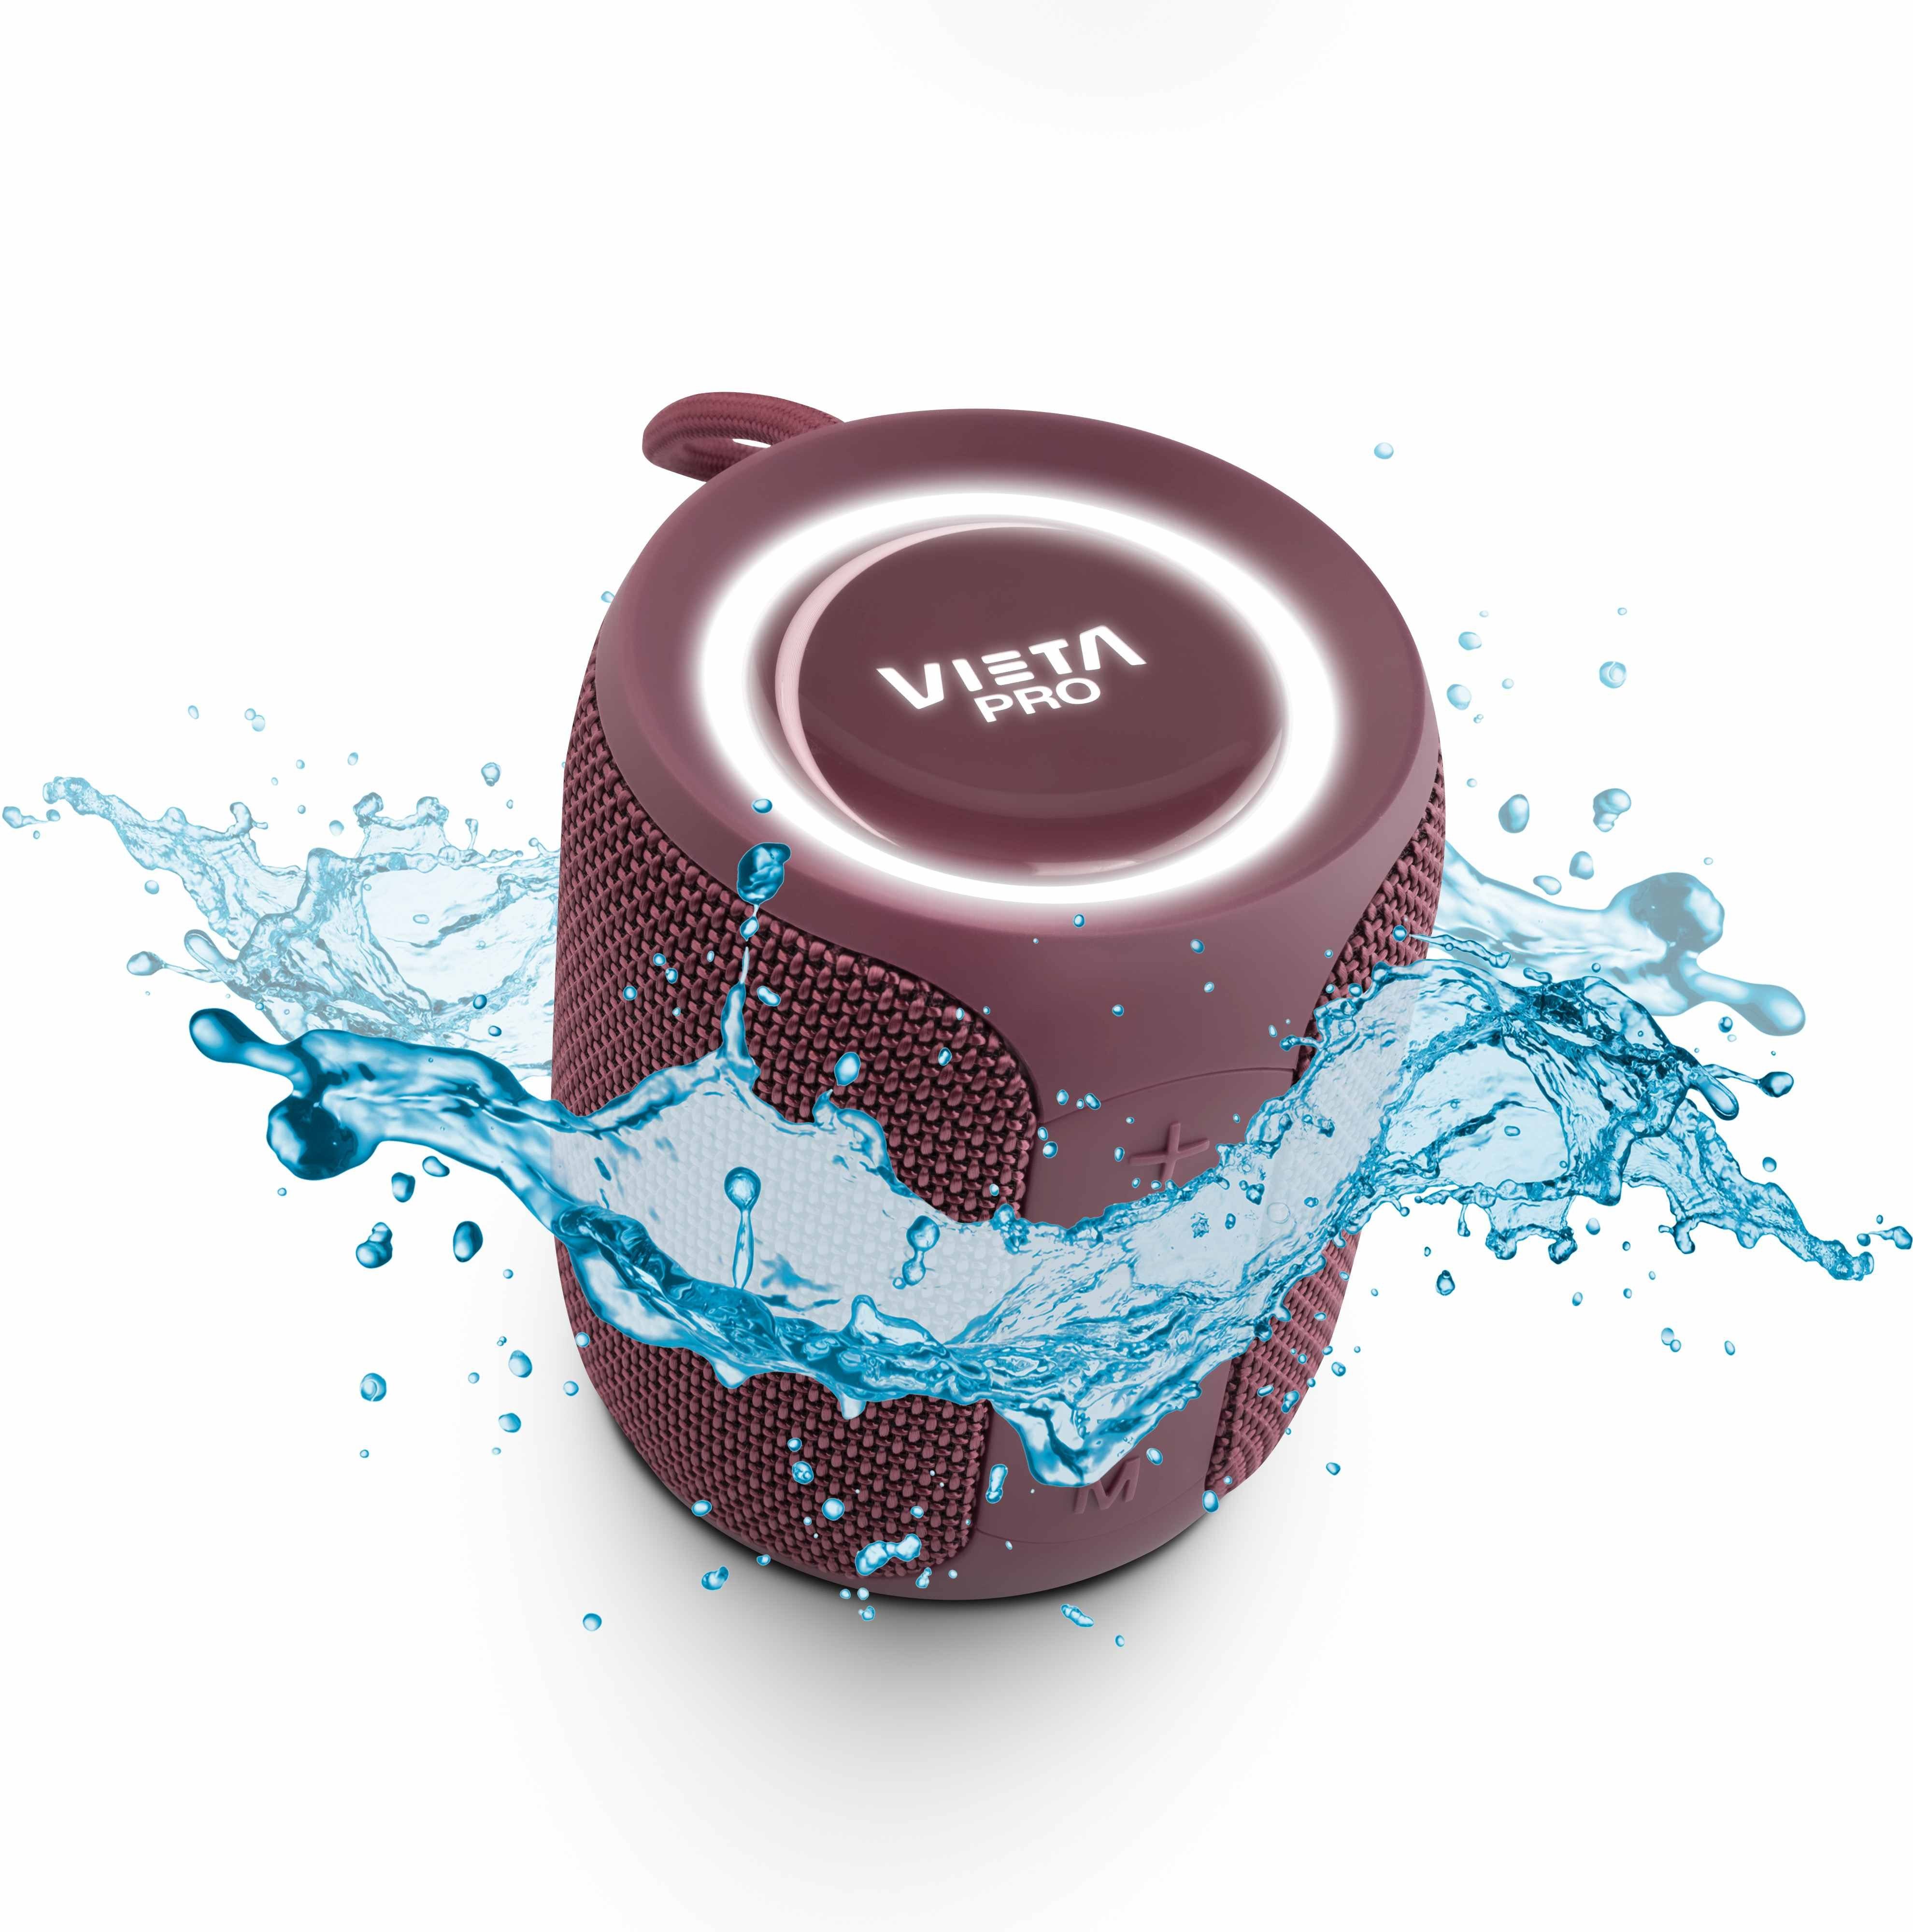 Vieta Pro #GROOVE Speaker Red Wireless Lautsprecher 20W Bluetooth